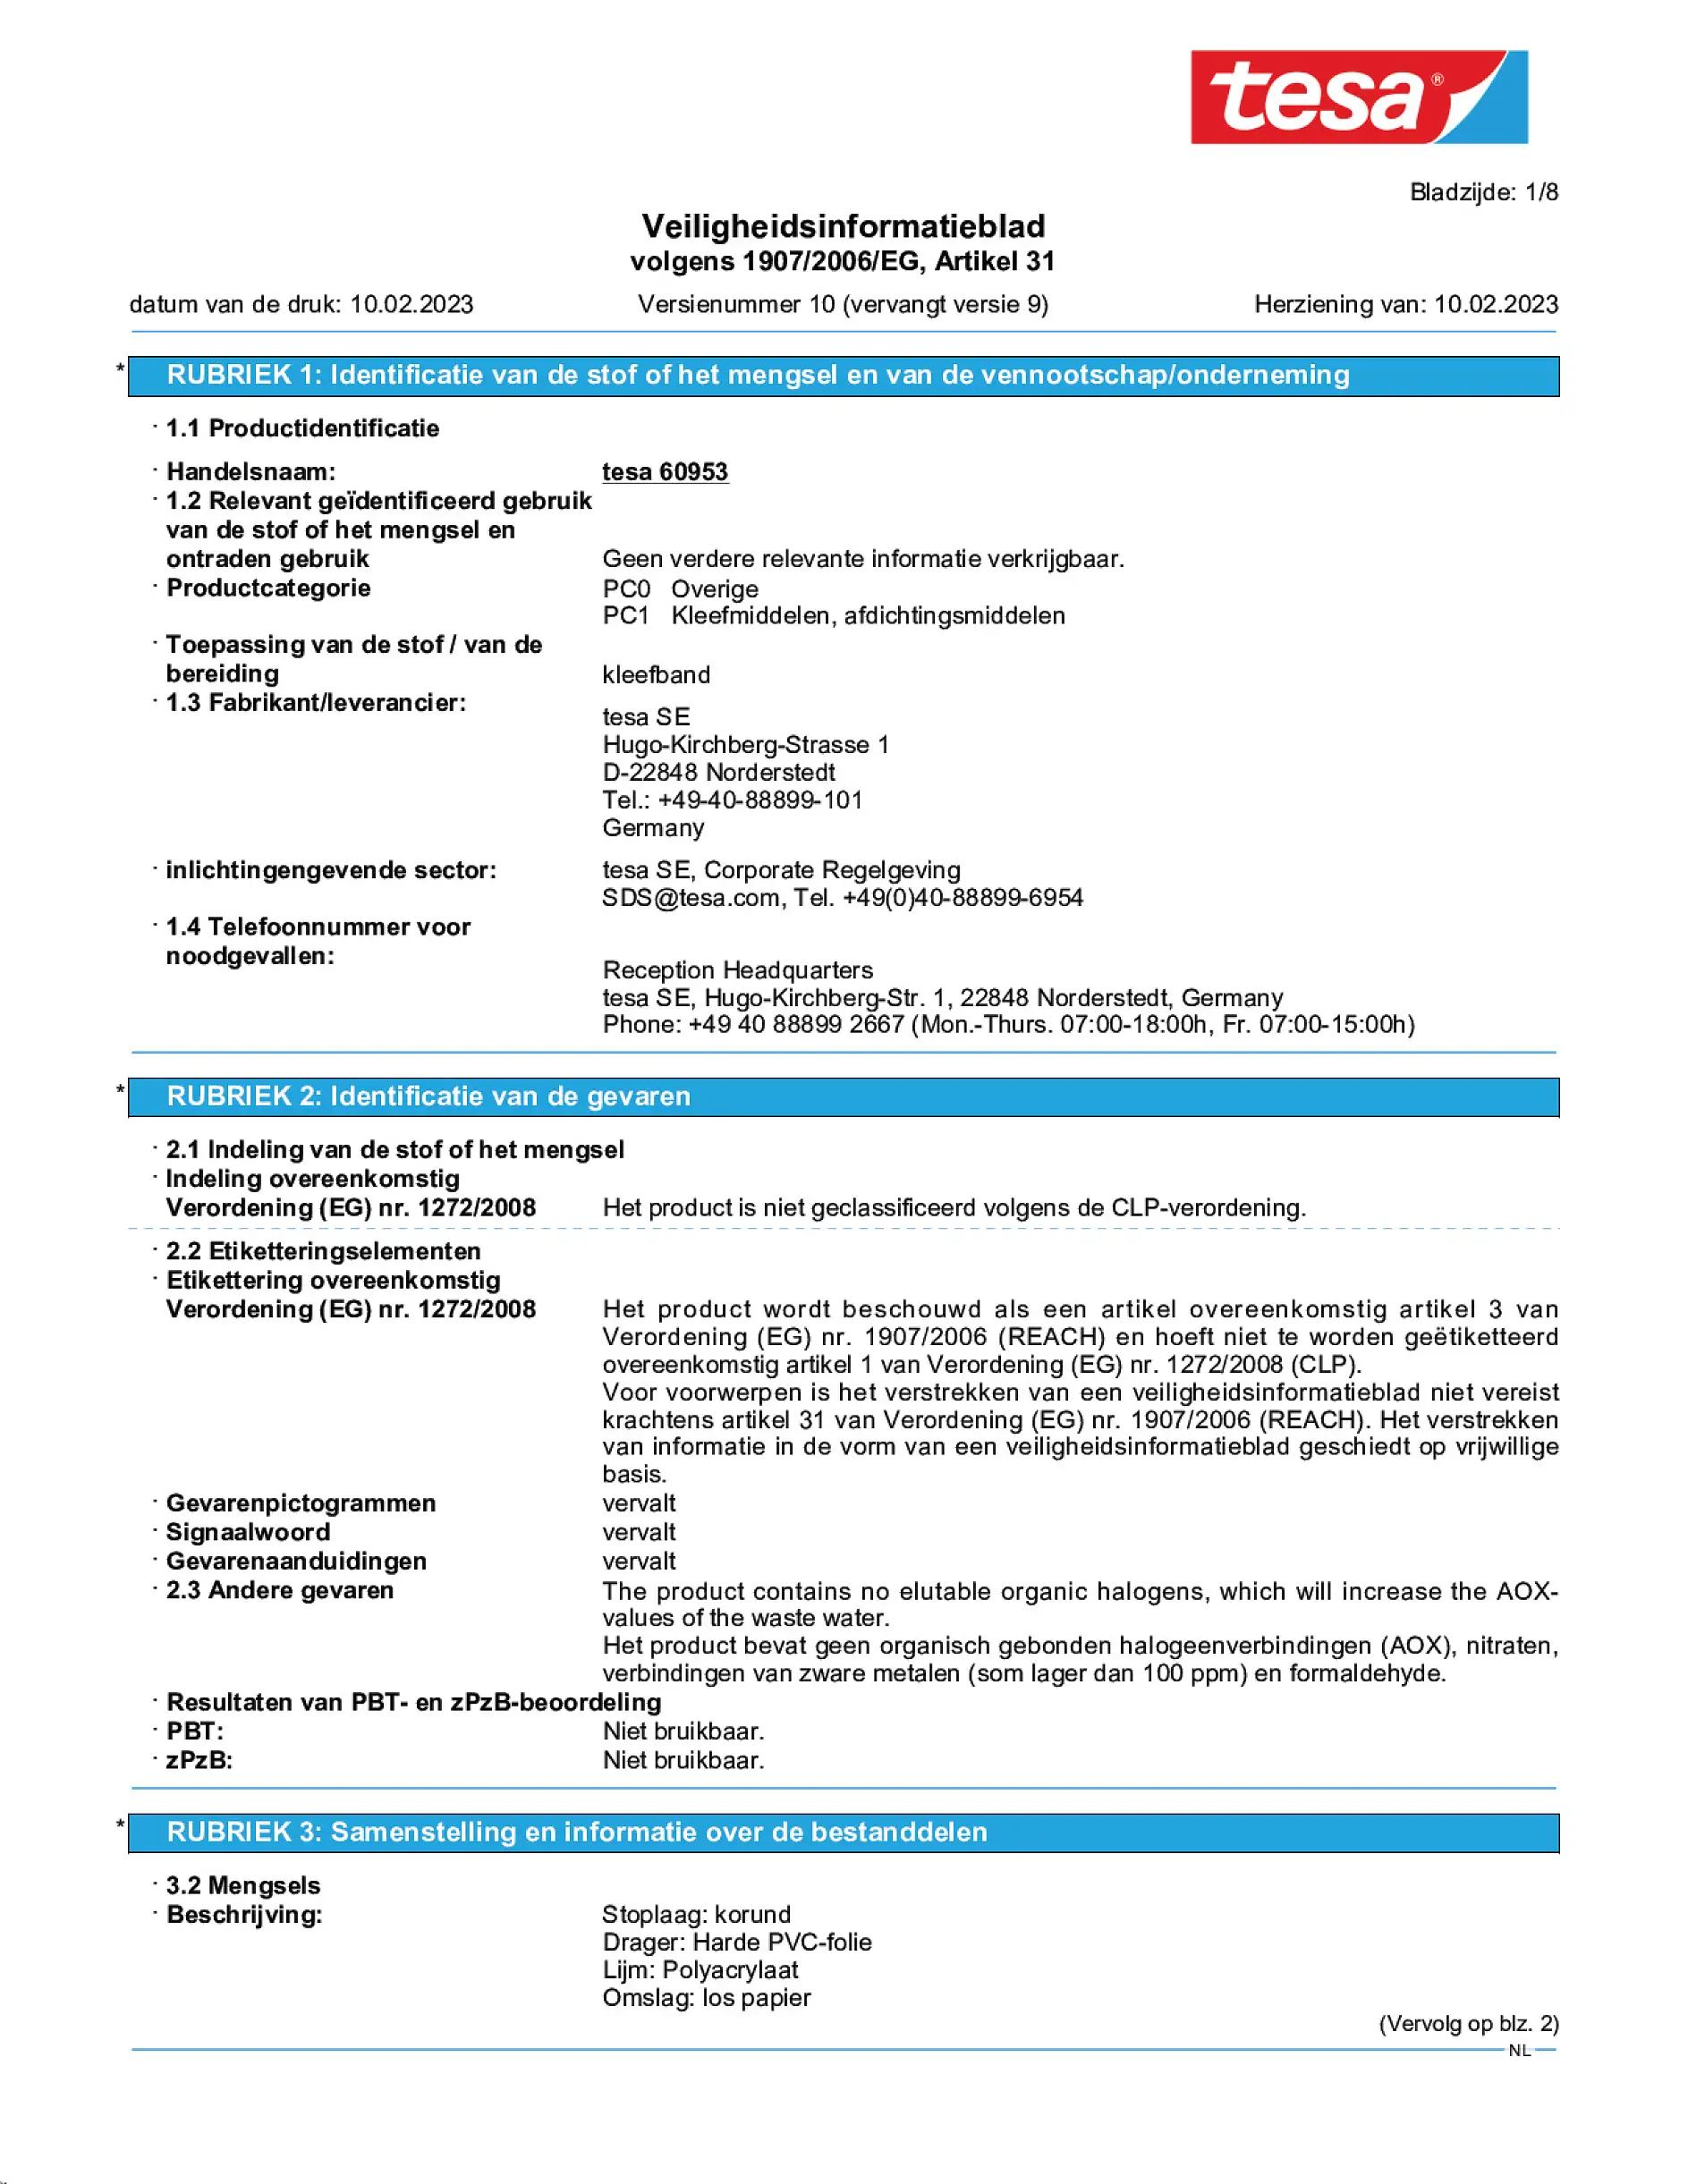 Safety data sheet_tesa® Professional 60953_nl-NL_v10